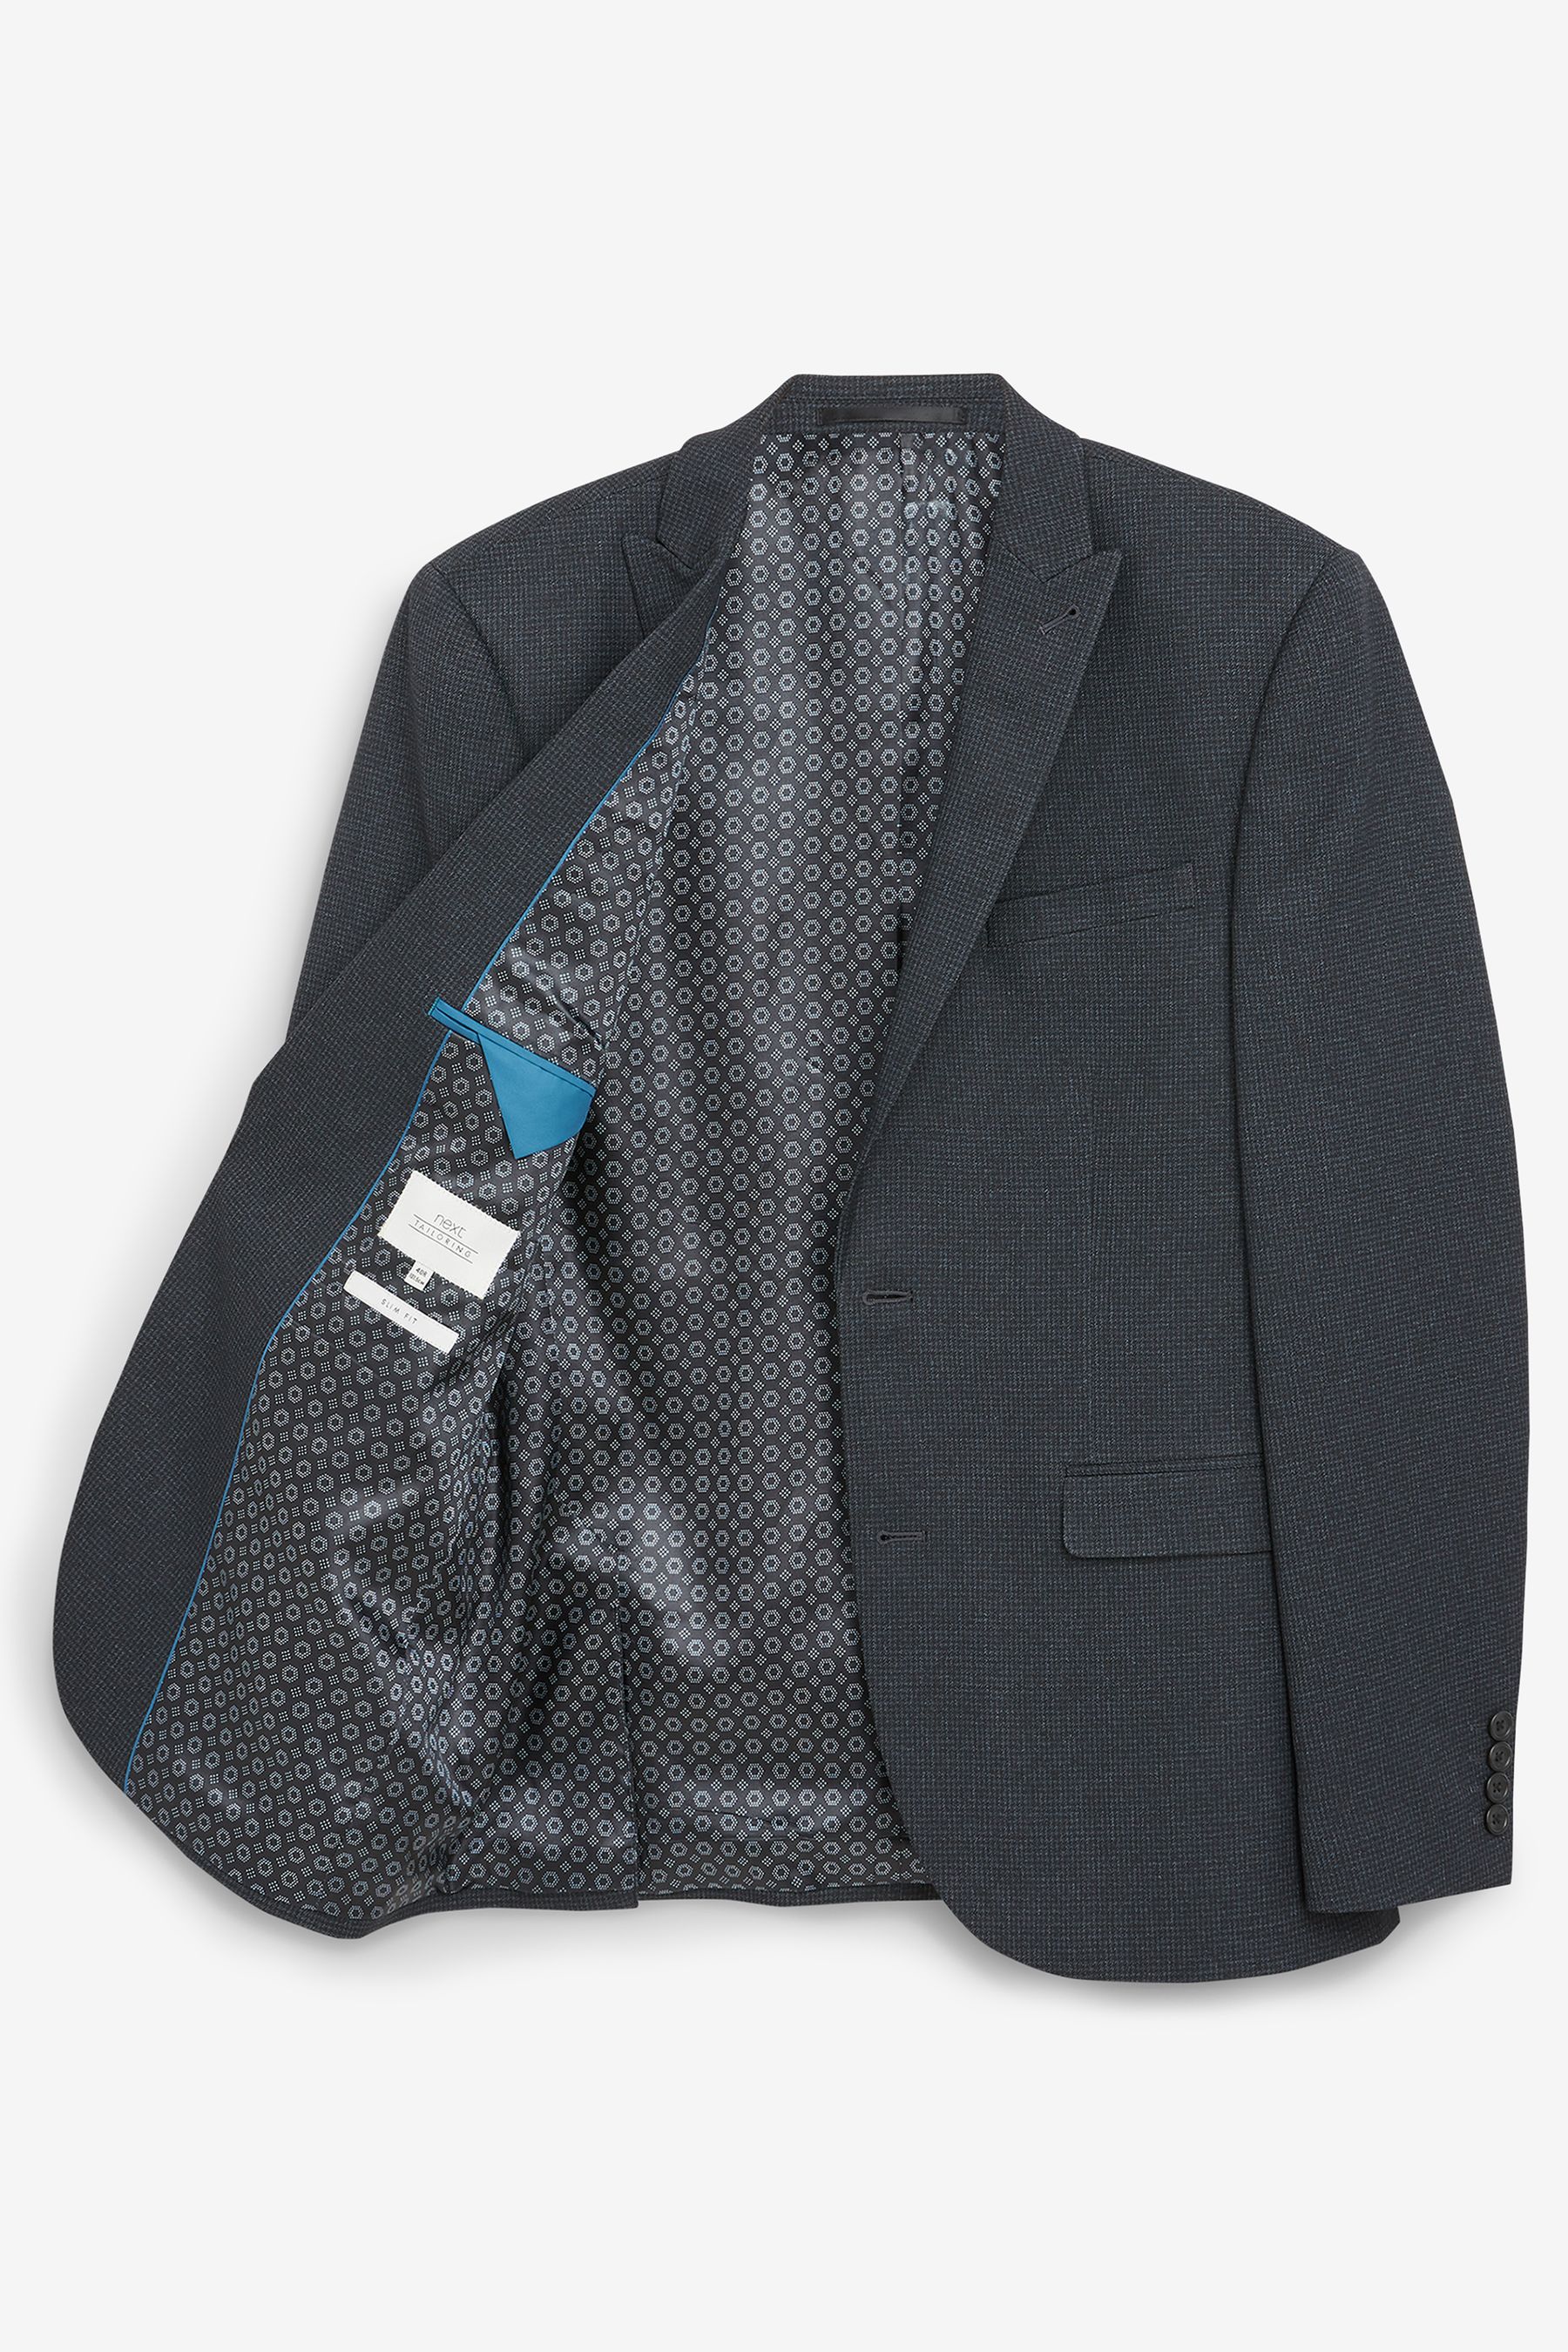 Custom Design Office Men V-neck Single Breasted Dark Grey Woven Blazer Suit